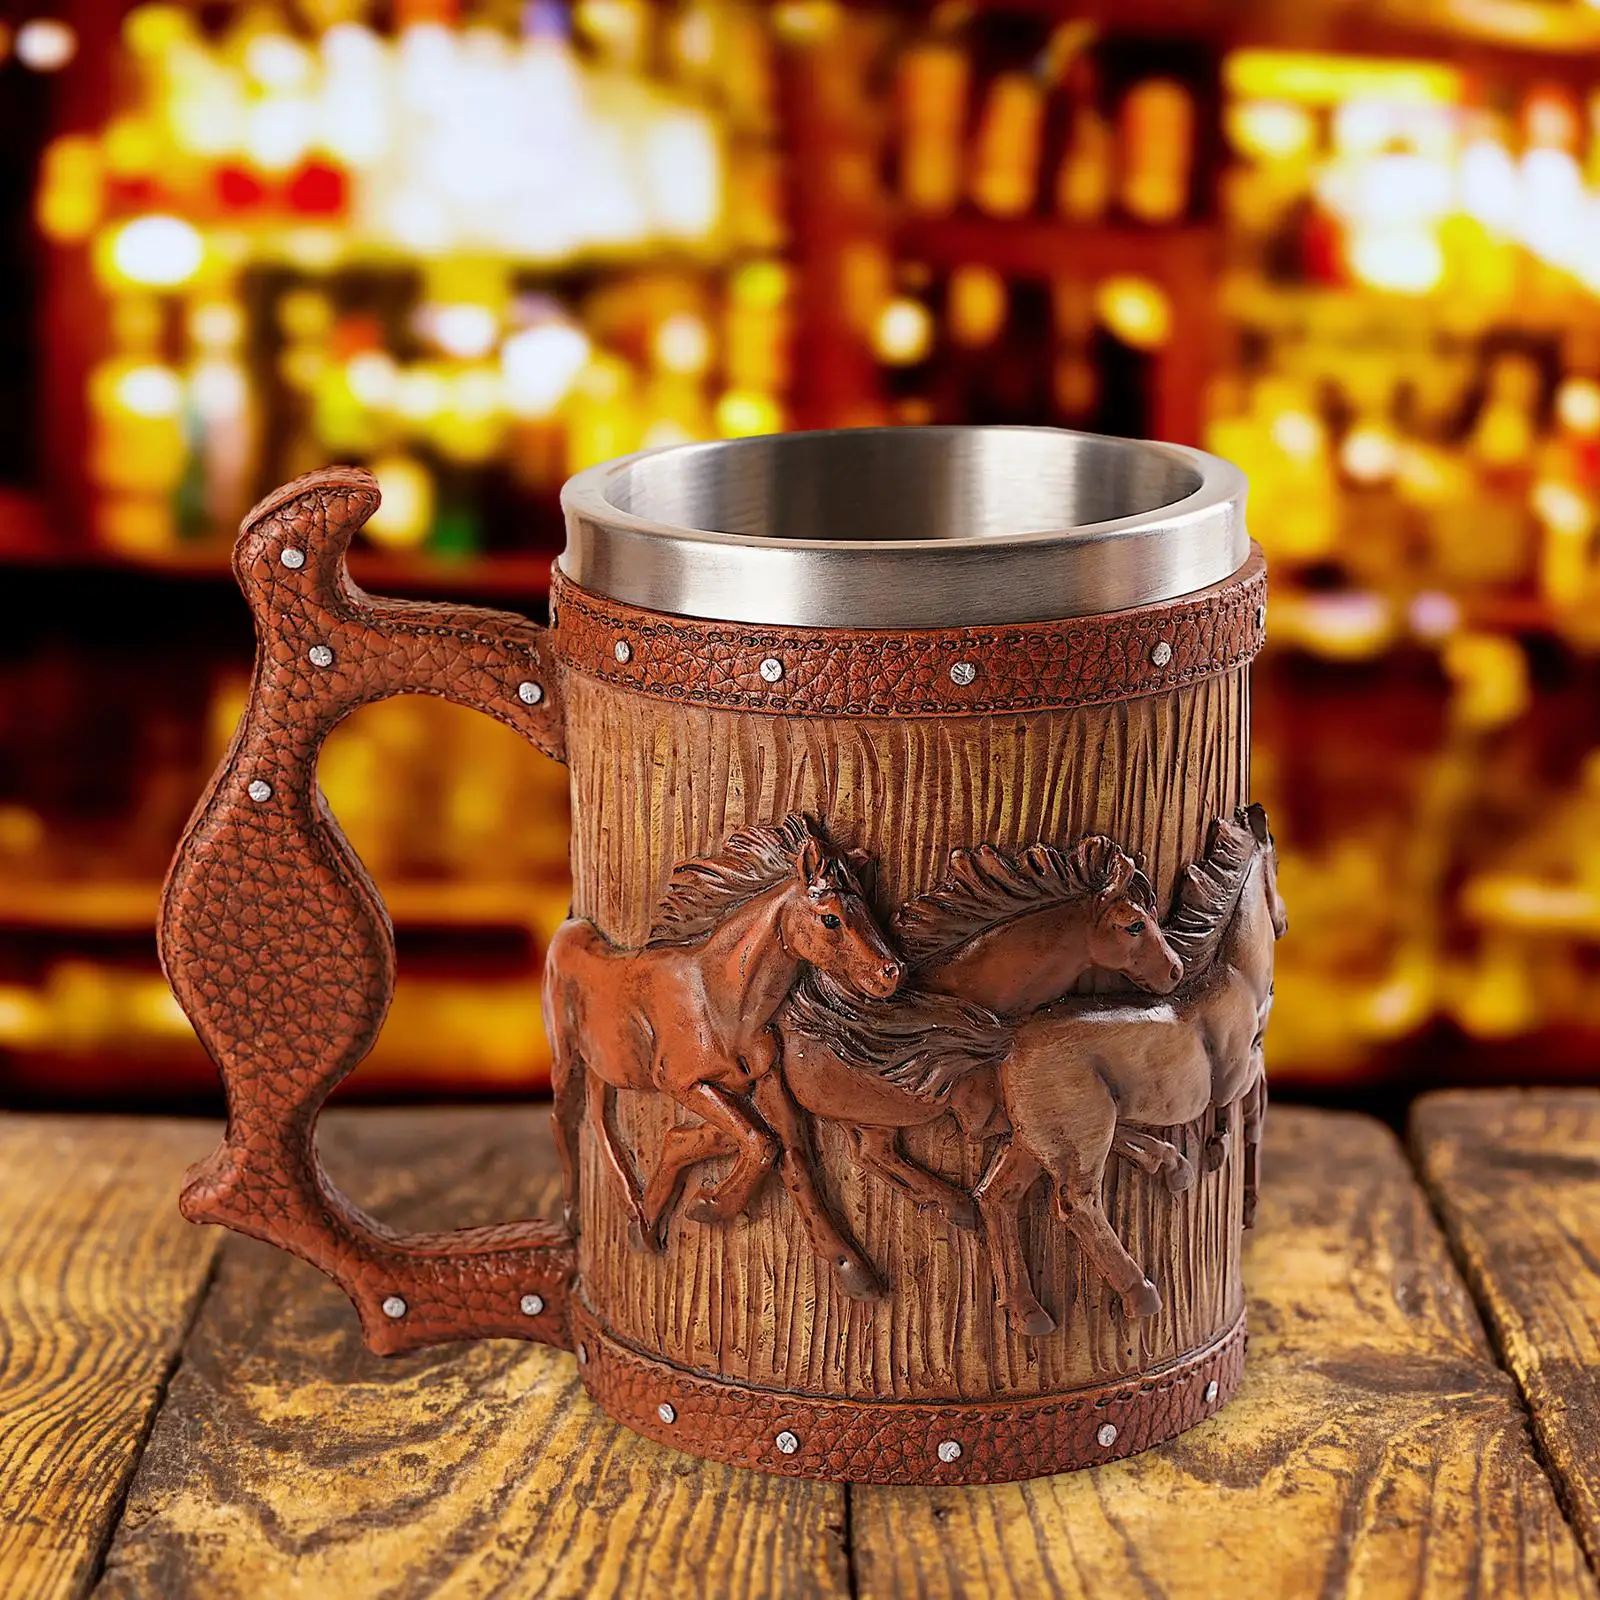 Barrel Beer Mug Resin Home Decor Rustic Handcrafted Bar Accessories Tumbler Mug Drinkware for Juice Milk Bar Restaurant Party